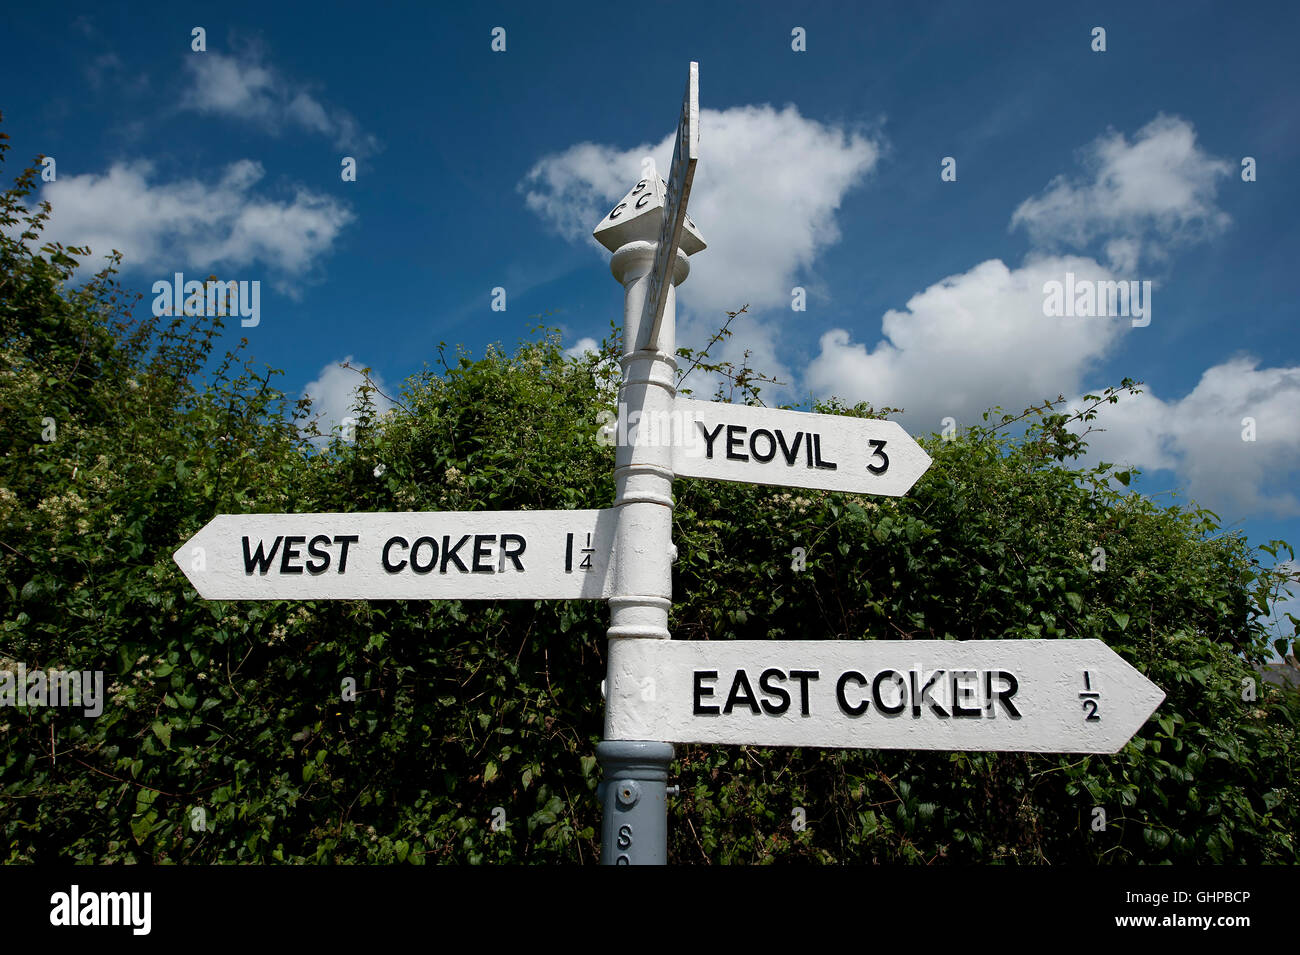 Road sign, East Coker, Yeovil, Somerset, England, United Kingdom Stock Photo